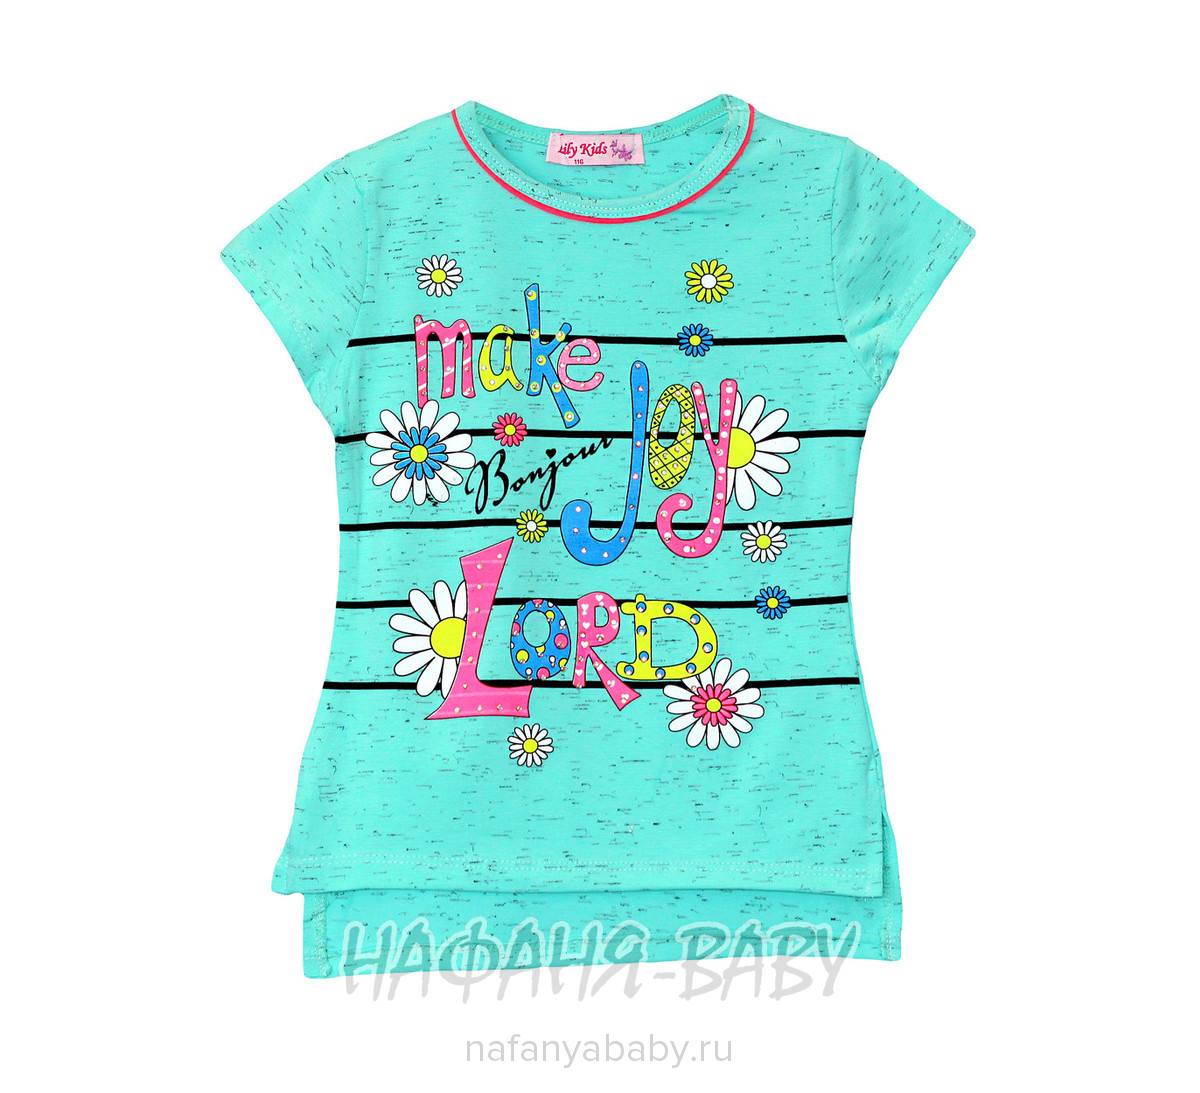 Детская футболка LILY Kids арт: 3532, 1-4 года, 5-9 лет, оптом Турция